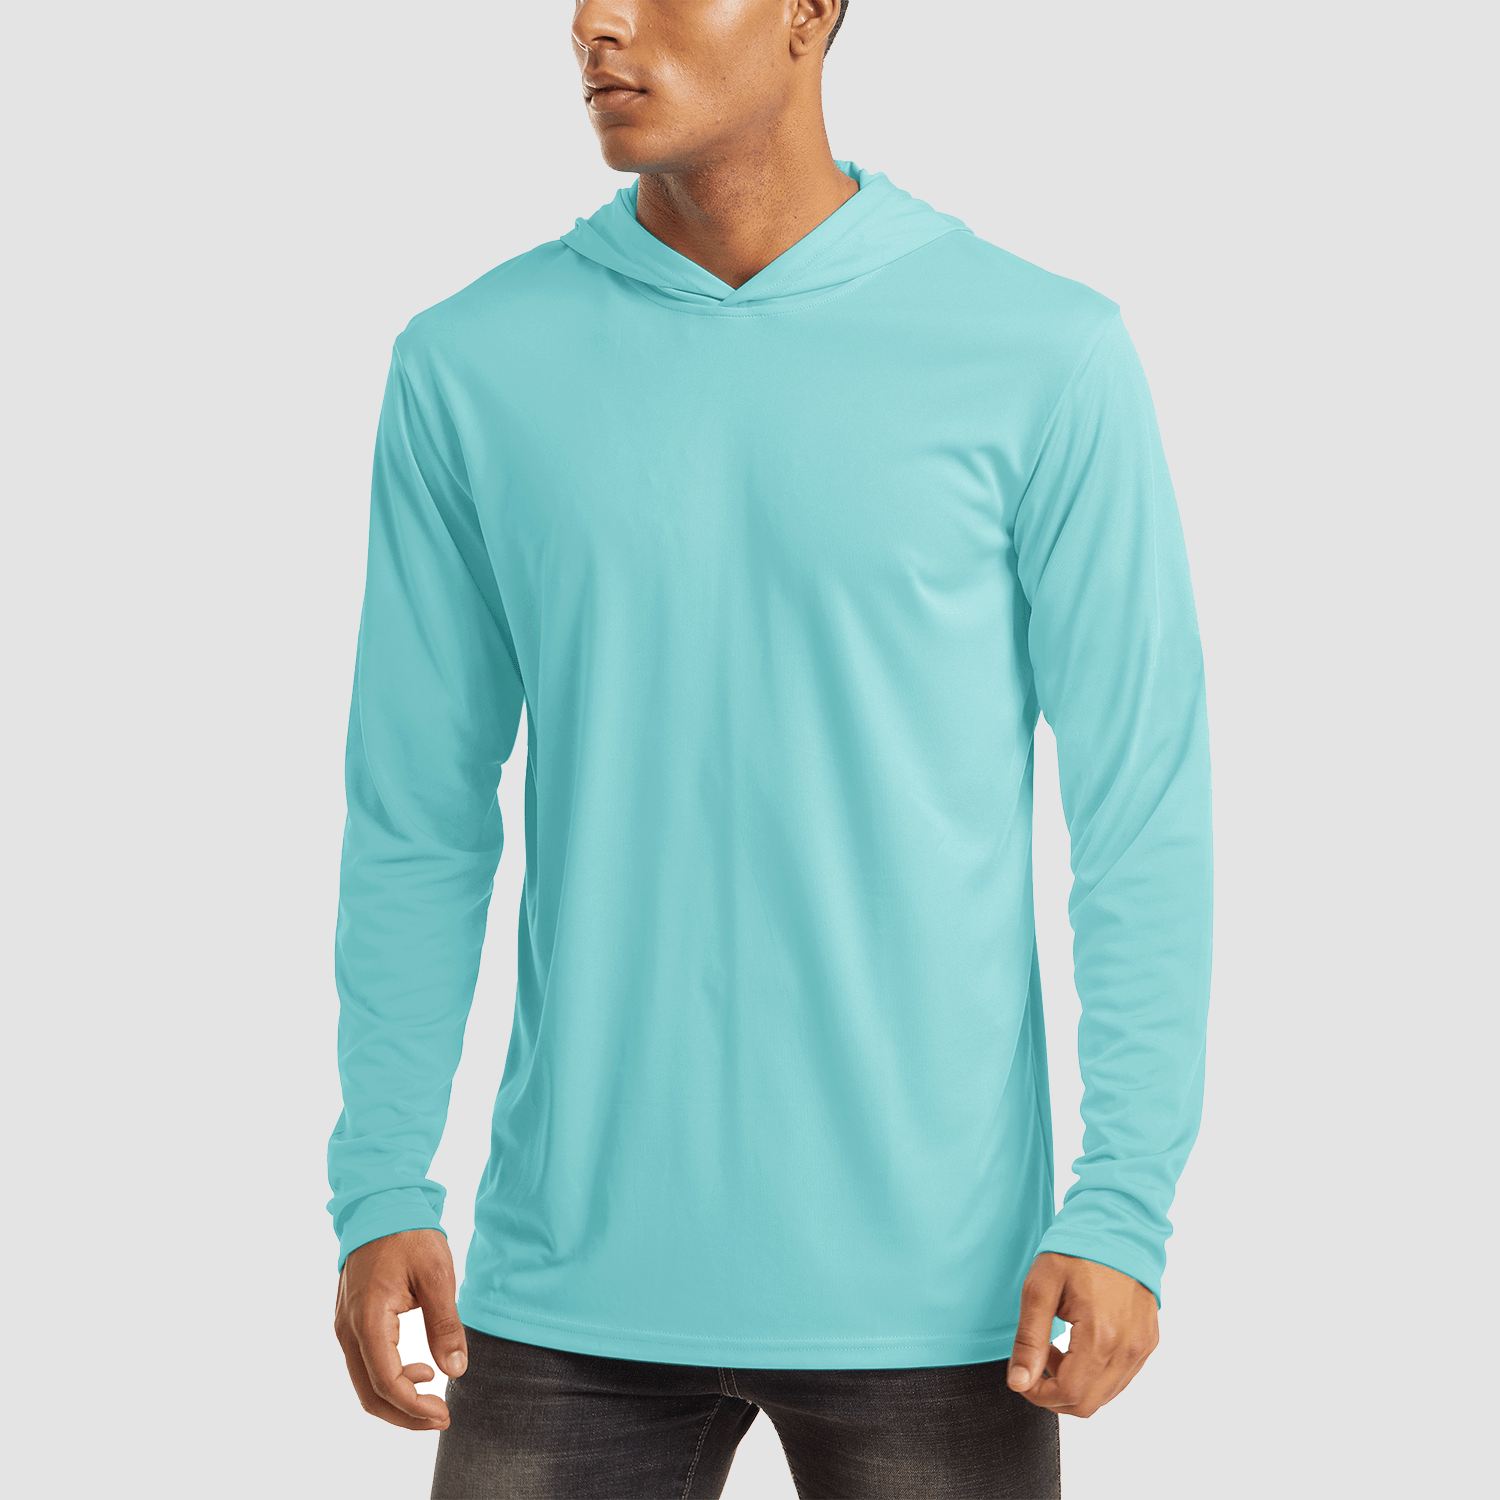 Koofin-Long Sleeve Fishing Shirt Hoodie for Men, UV Clothing